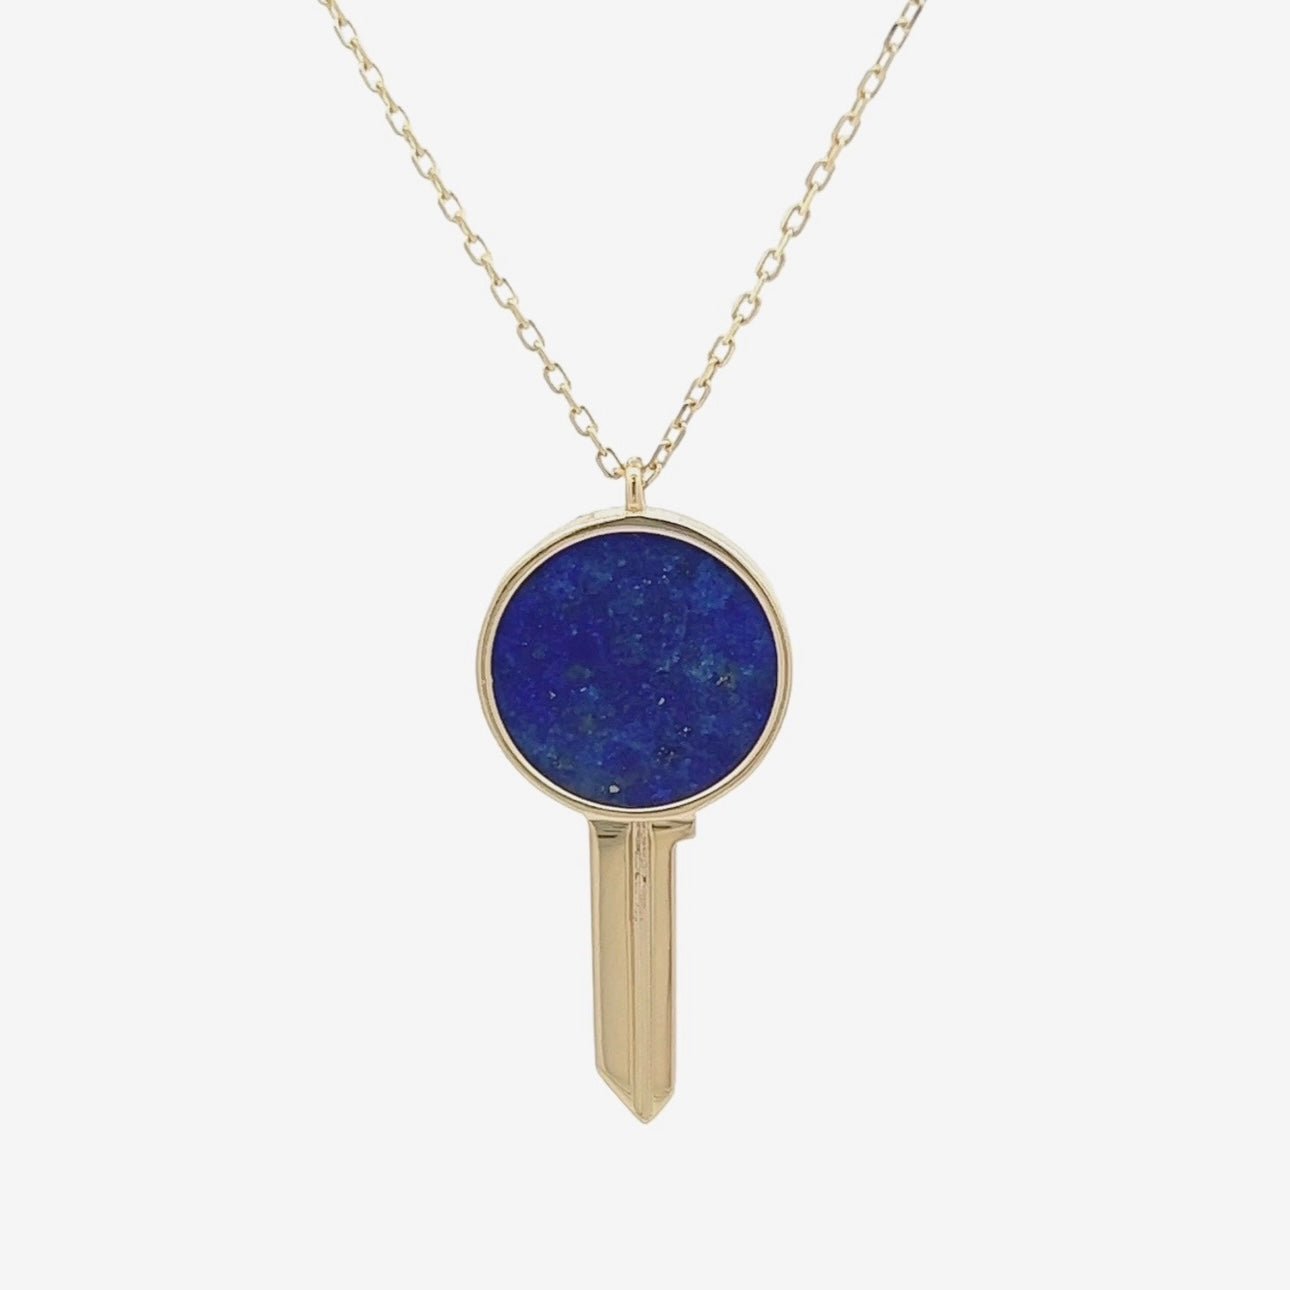 Key Necklace in Lapis Lazuli - 18k Gold - Ly